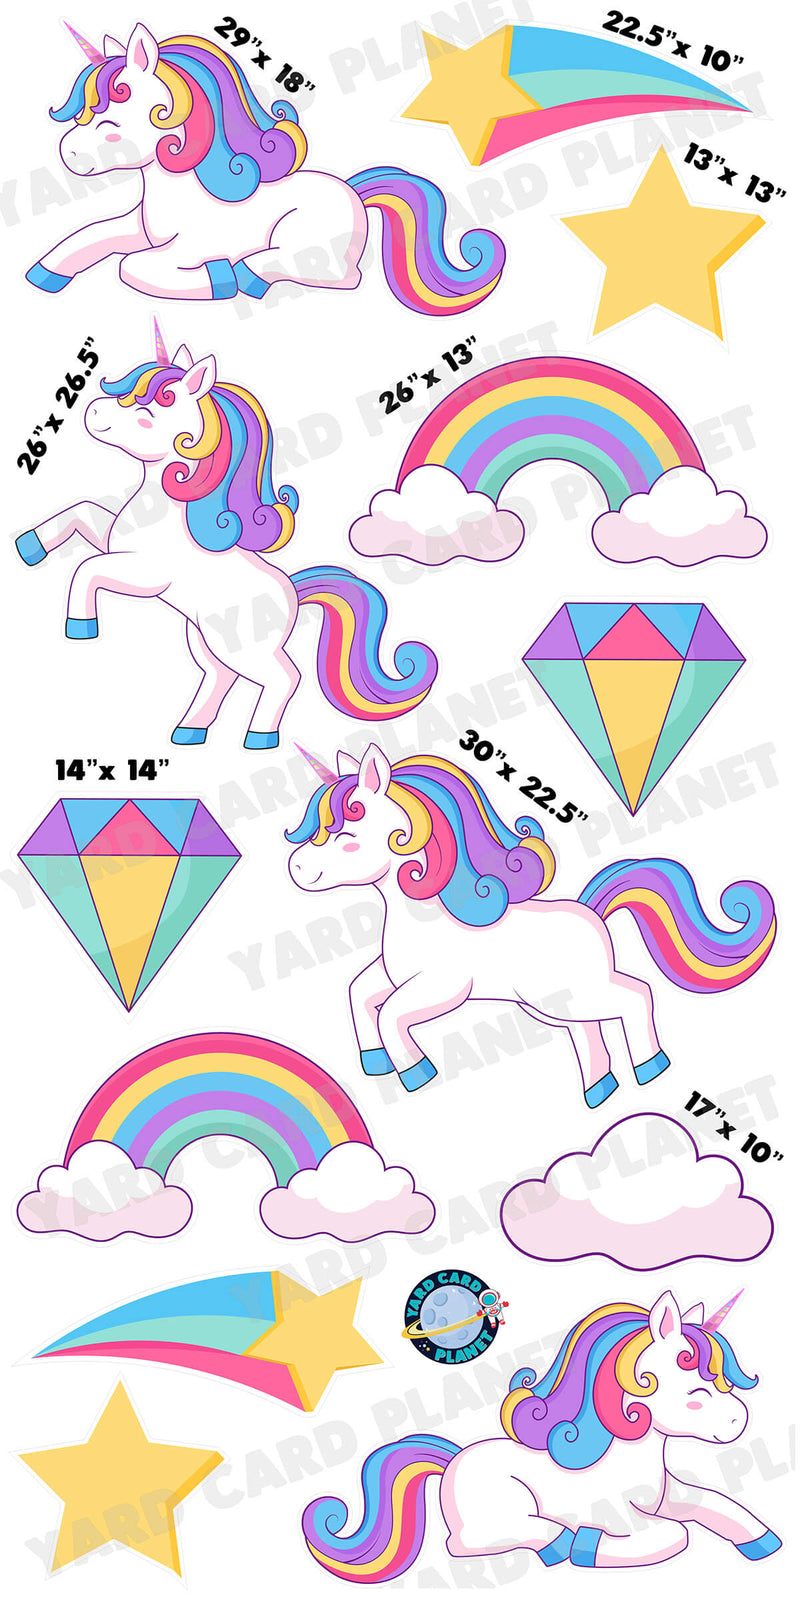 Magical Unicorns and Rainbows Yard Card Flair Set with Measurements